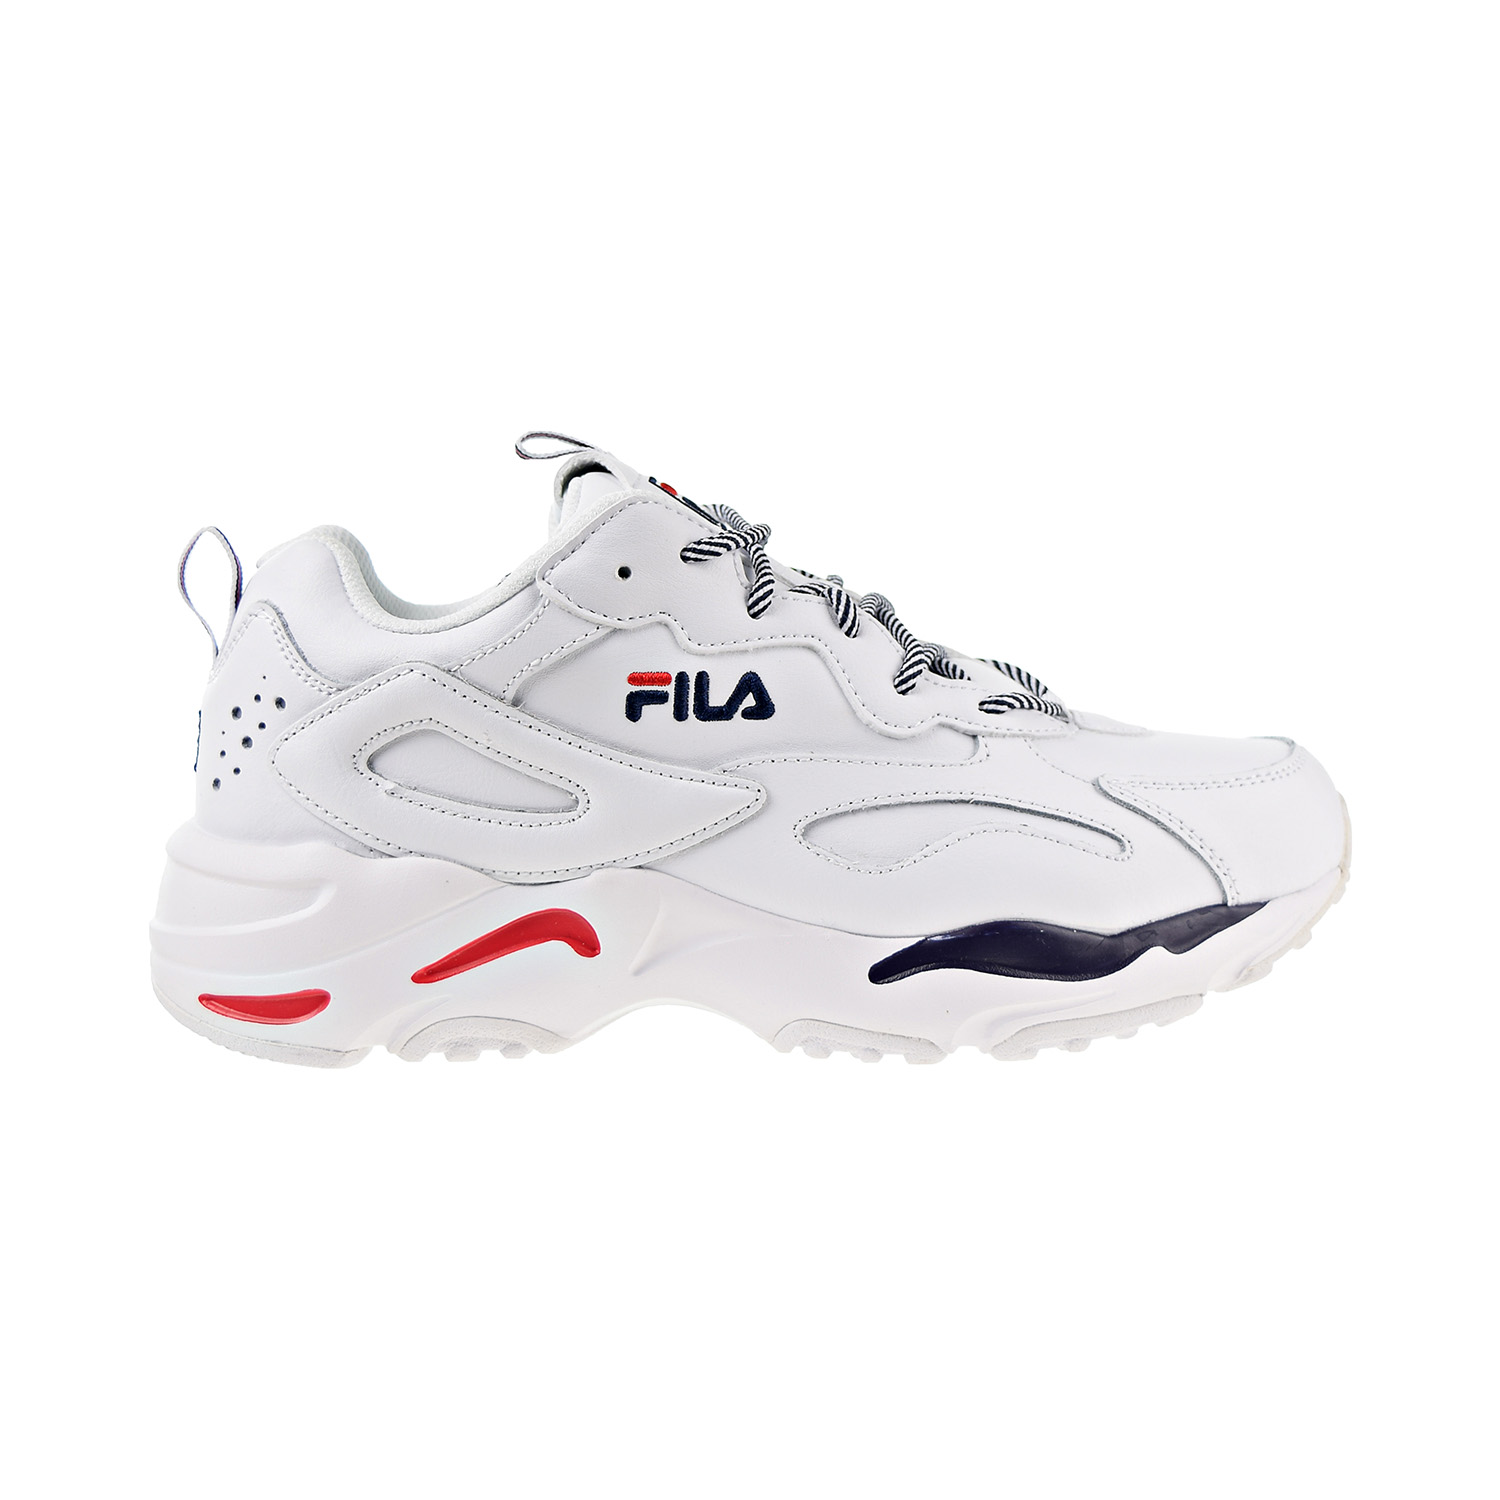 Fila Ray Tracer Men's Shoes White-Fila Navy-Fila Red 1RM00661-125 | eBay